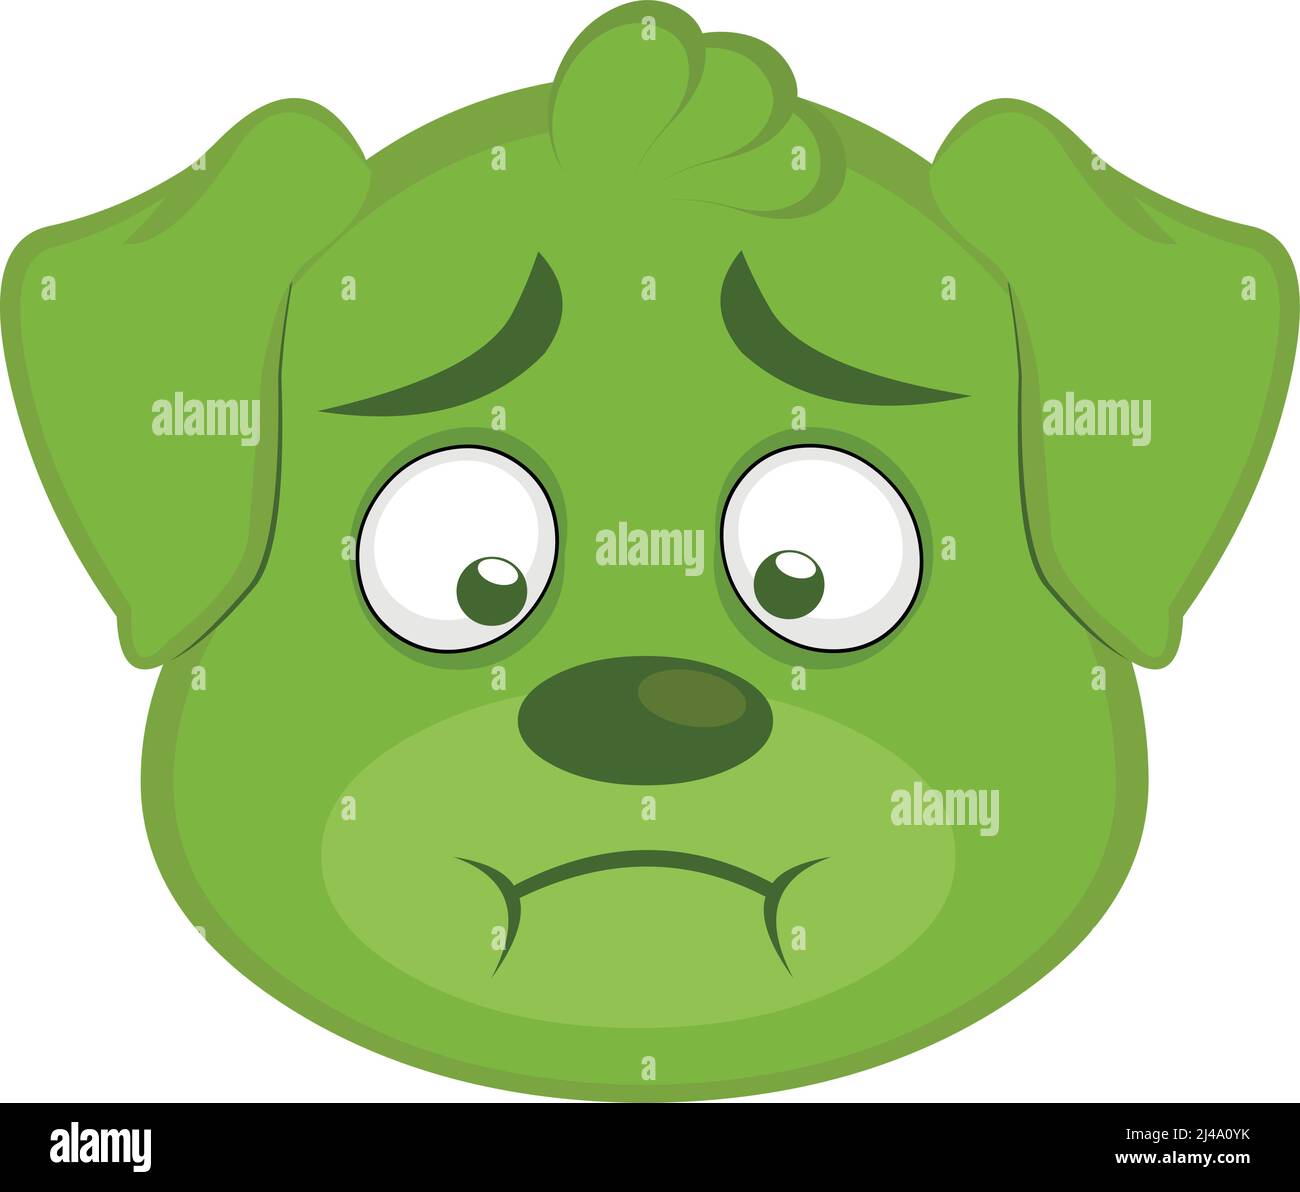 Vektor-Illustration des Gesichts eines übel grünen Cartoon-Hundes Stock Vektor